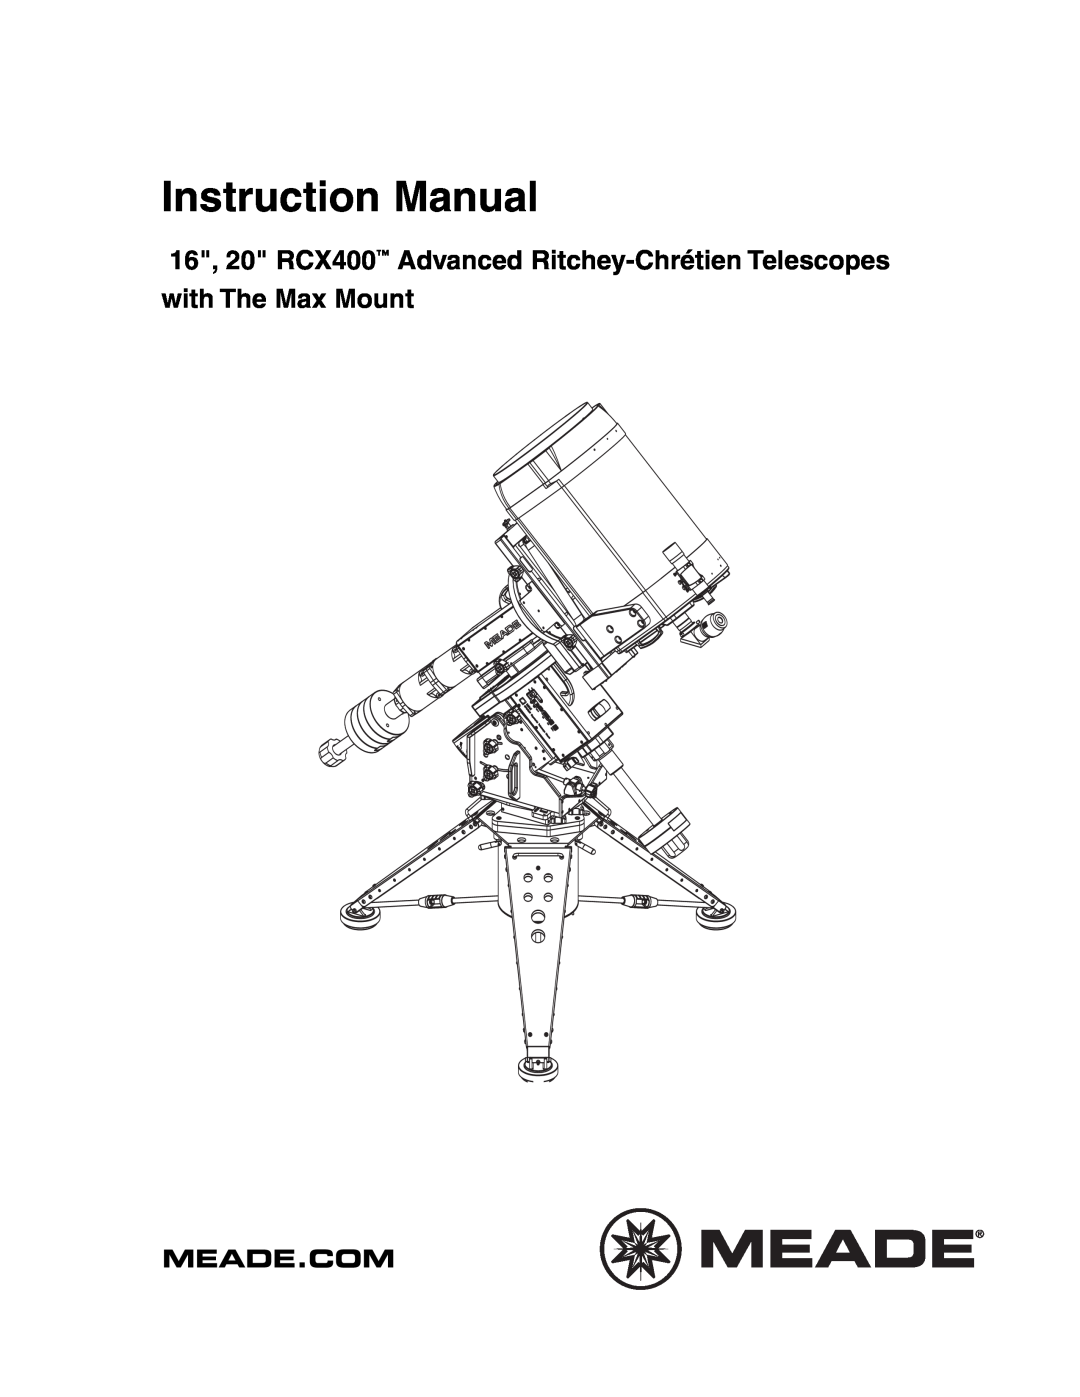 Meade RCX400 instruction manual 